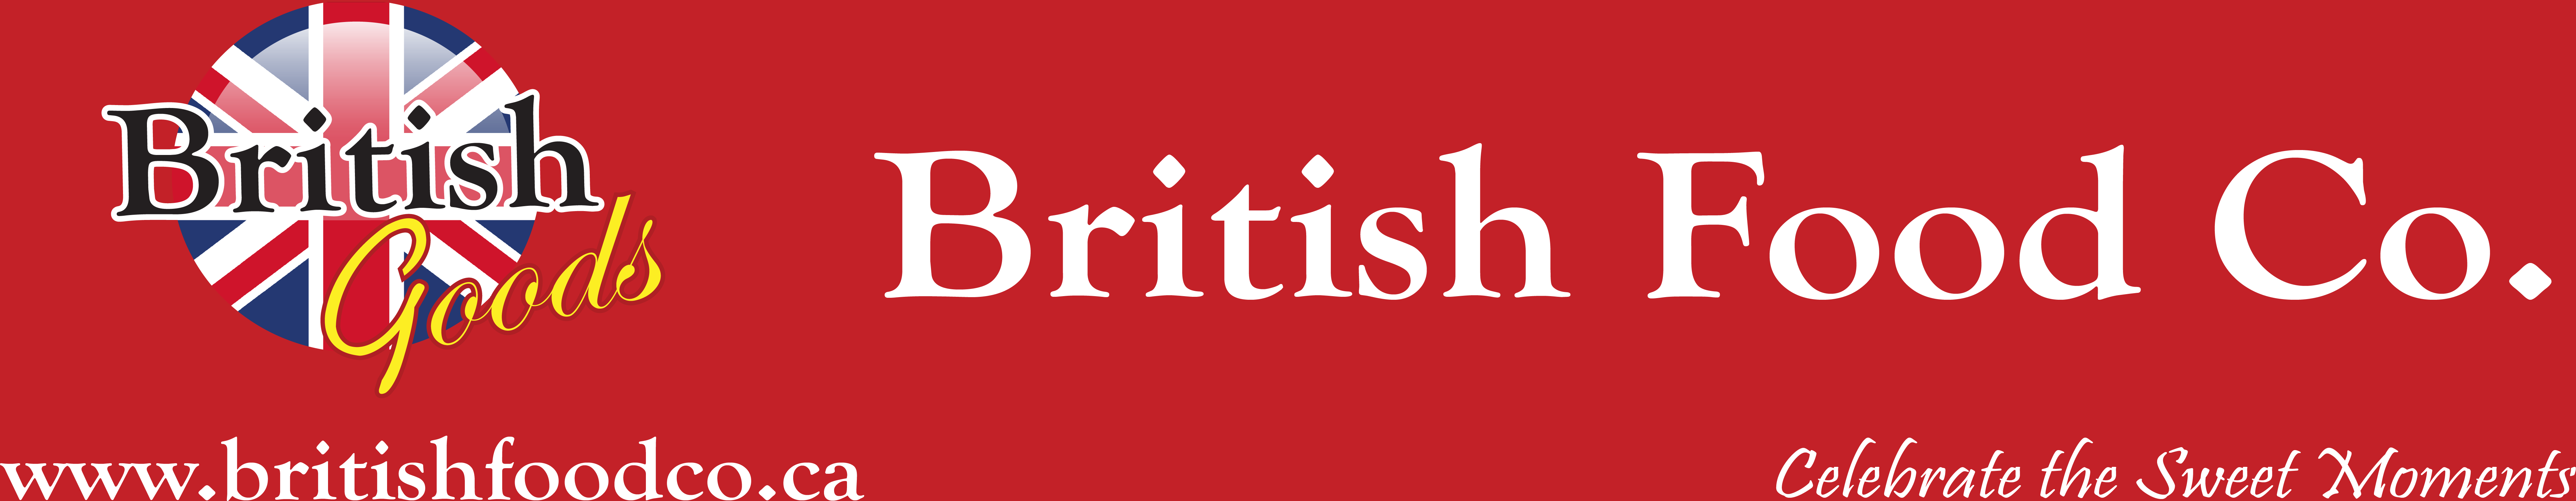 British Food Co.